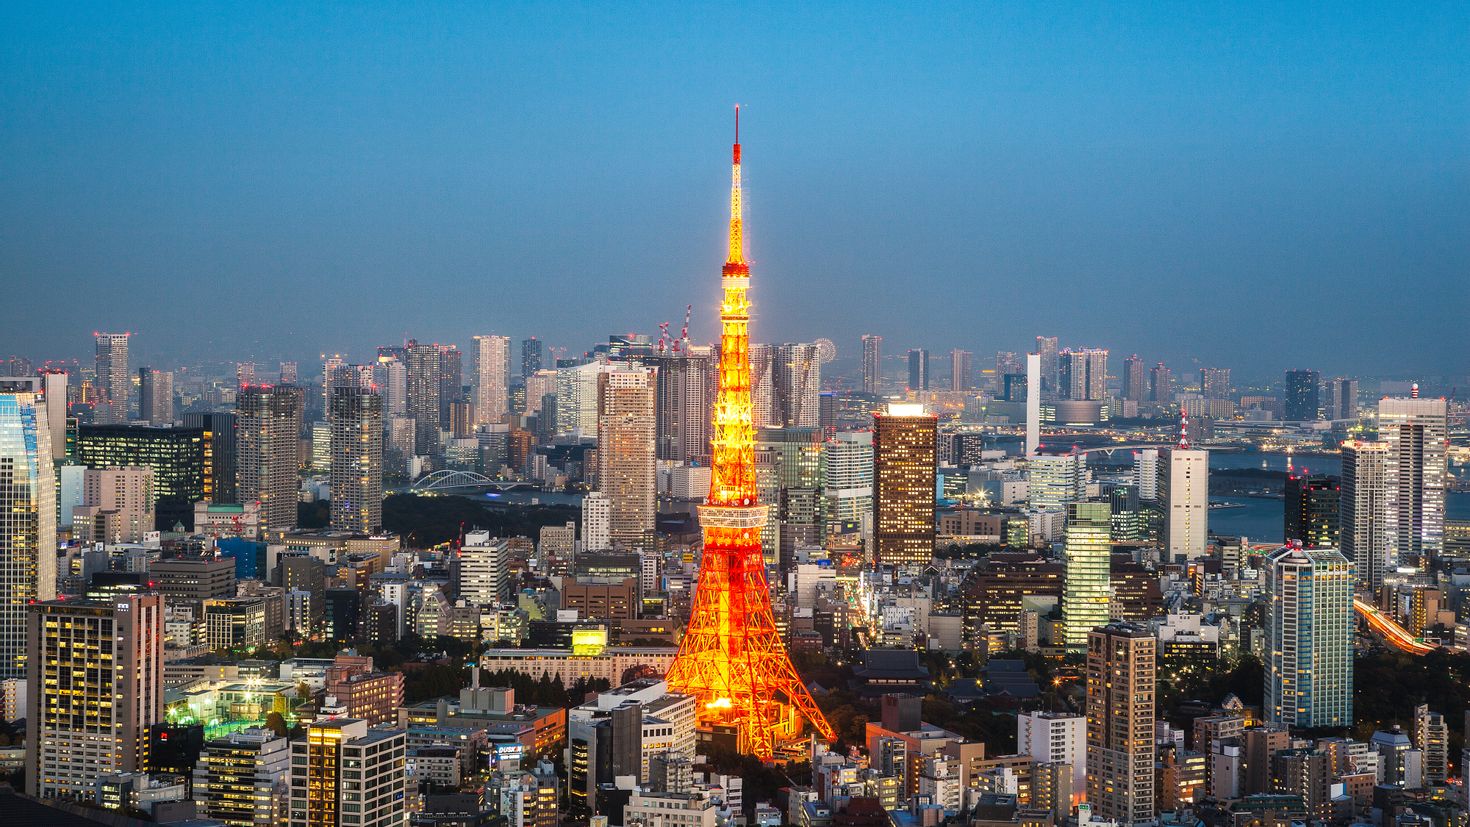 Tokyo 4. Телевизионная башня Токио. Япония Токио телебашня. Токийская башня в Японии. Токио Тауэр башня.